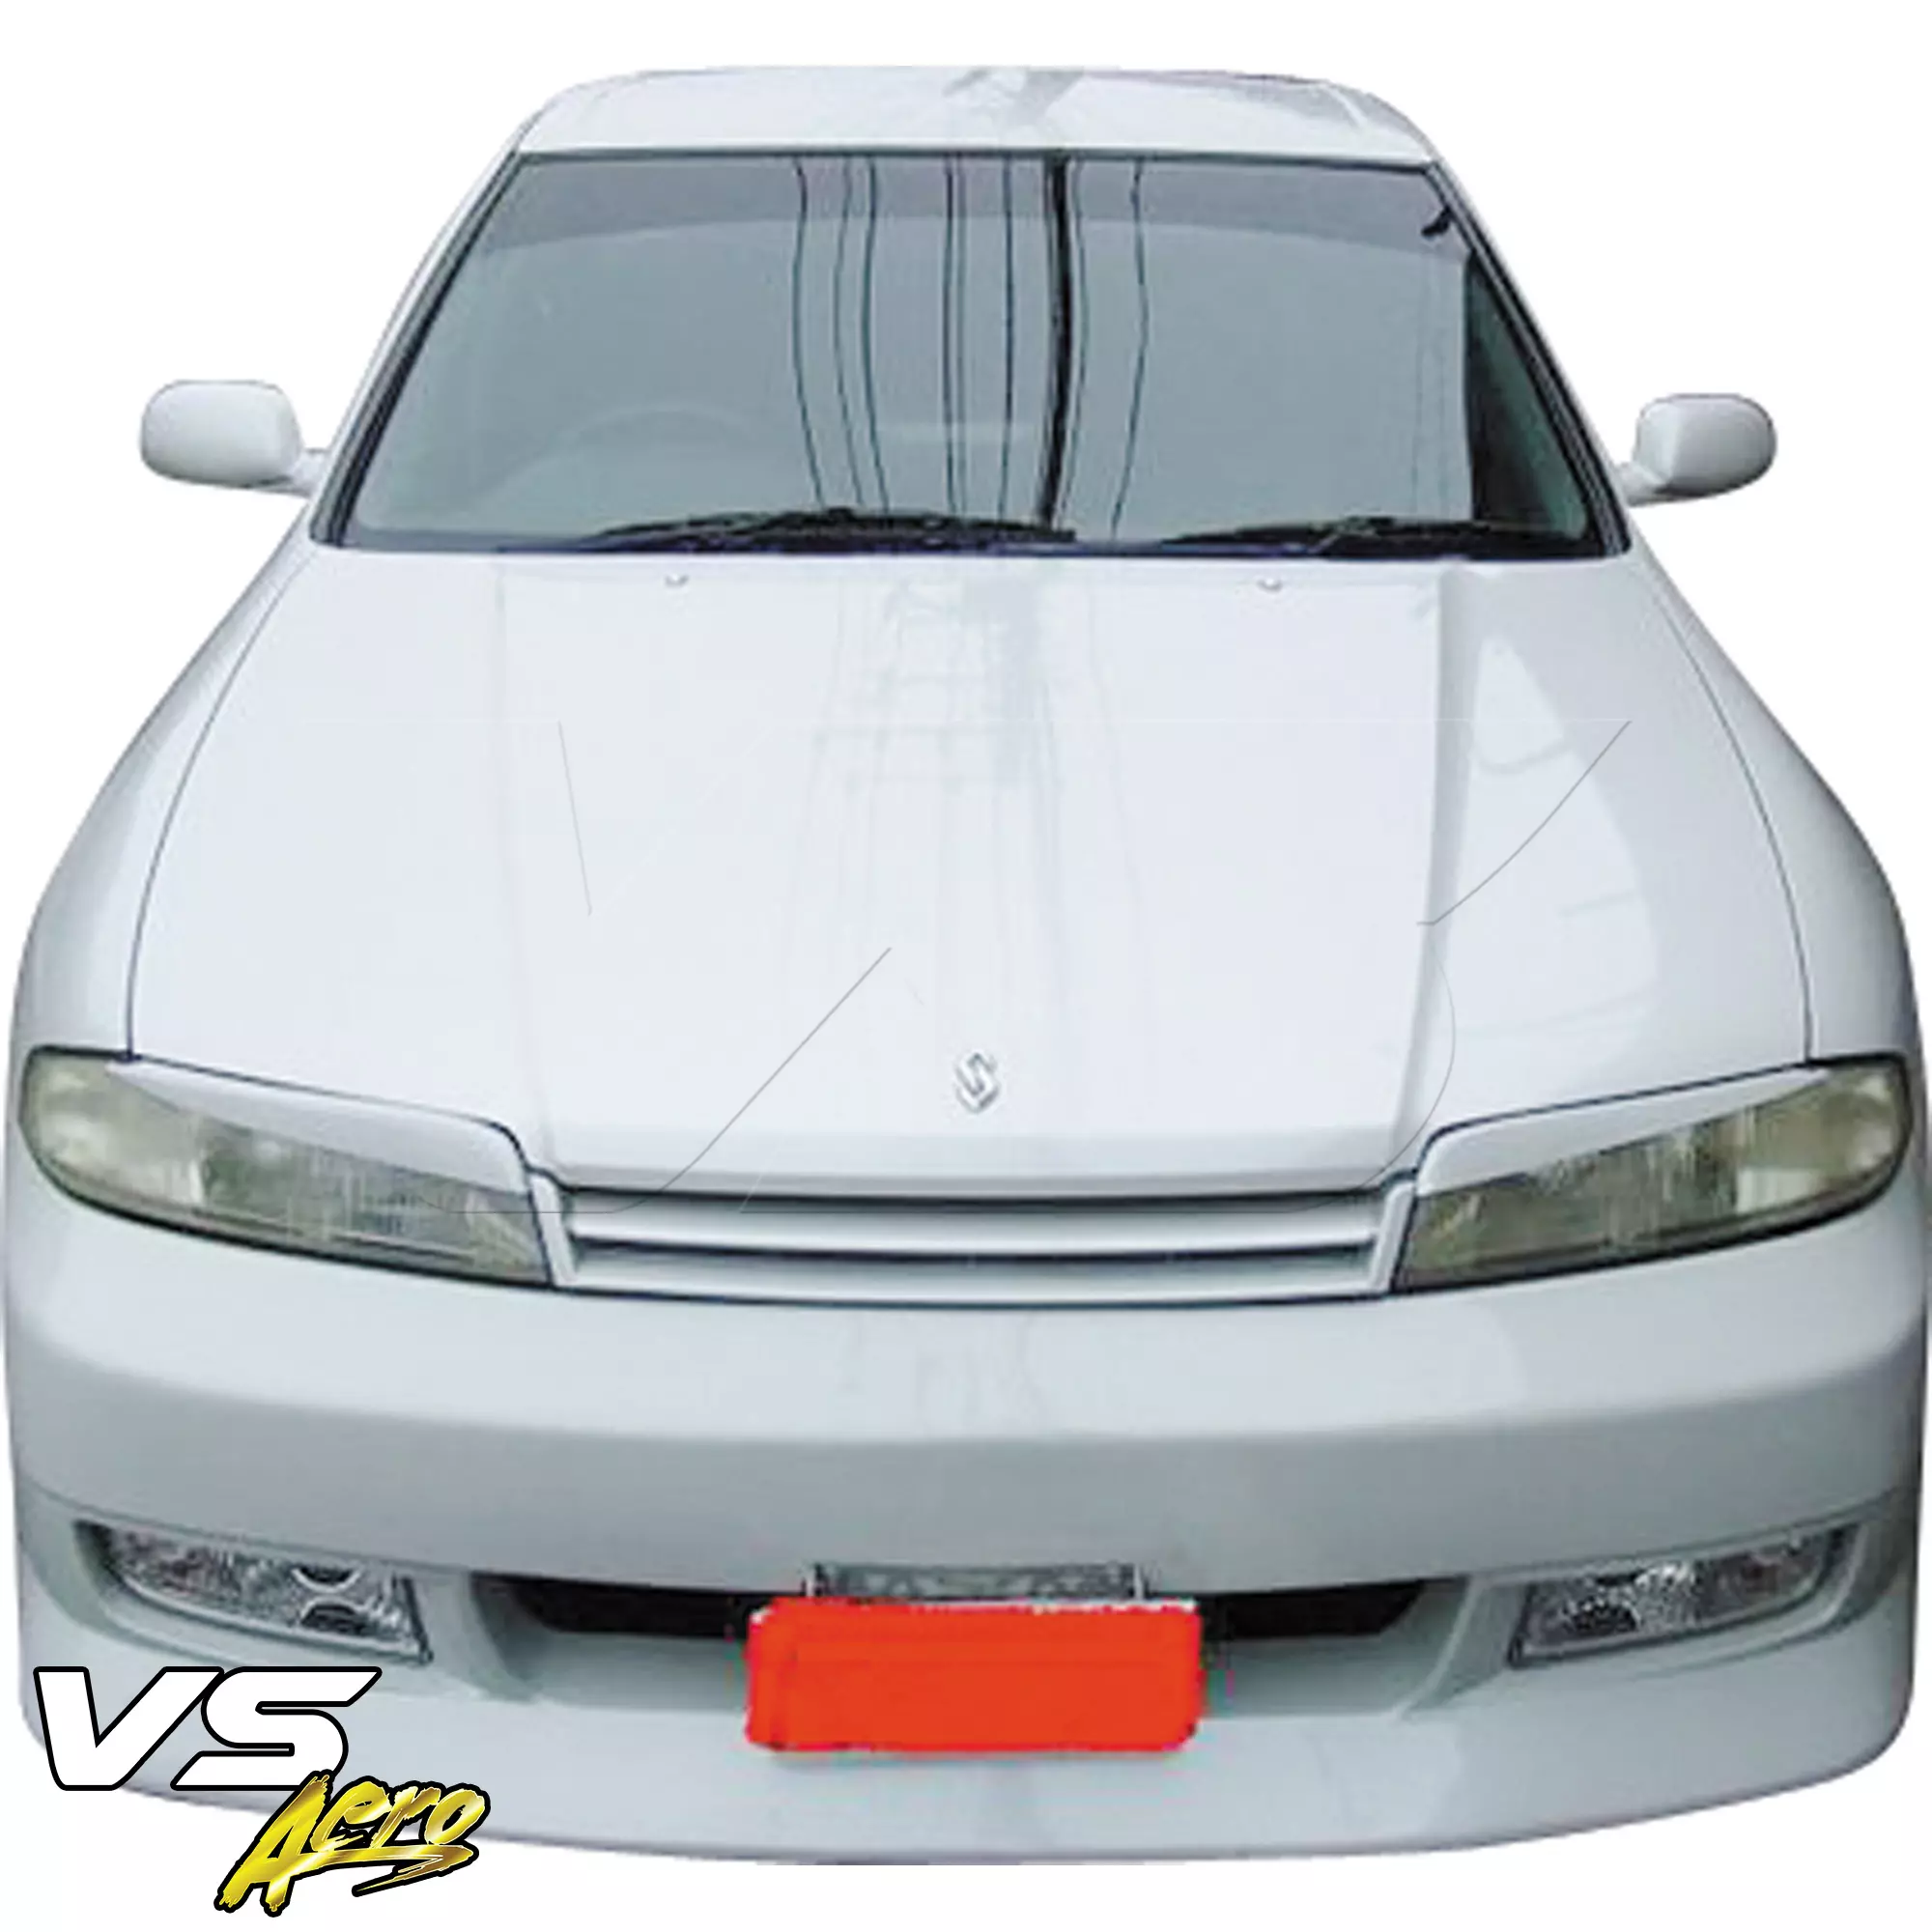 VSaero FRP FKON Body Kit 4pc > Nissan Skyline R33 GTS 1995-1998 > 4dr Sedan - Image 8